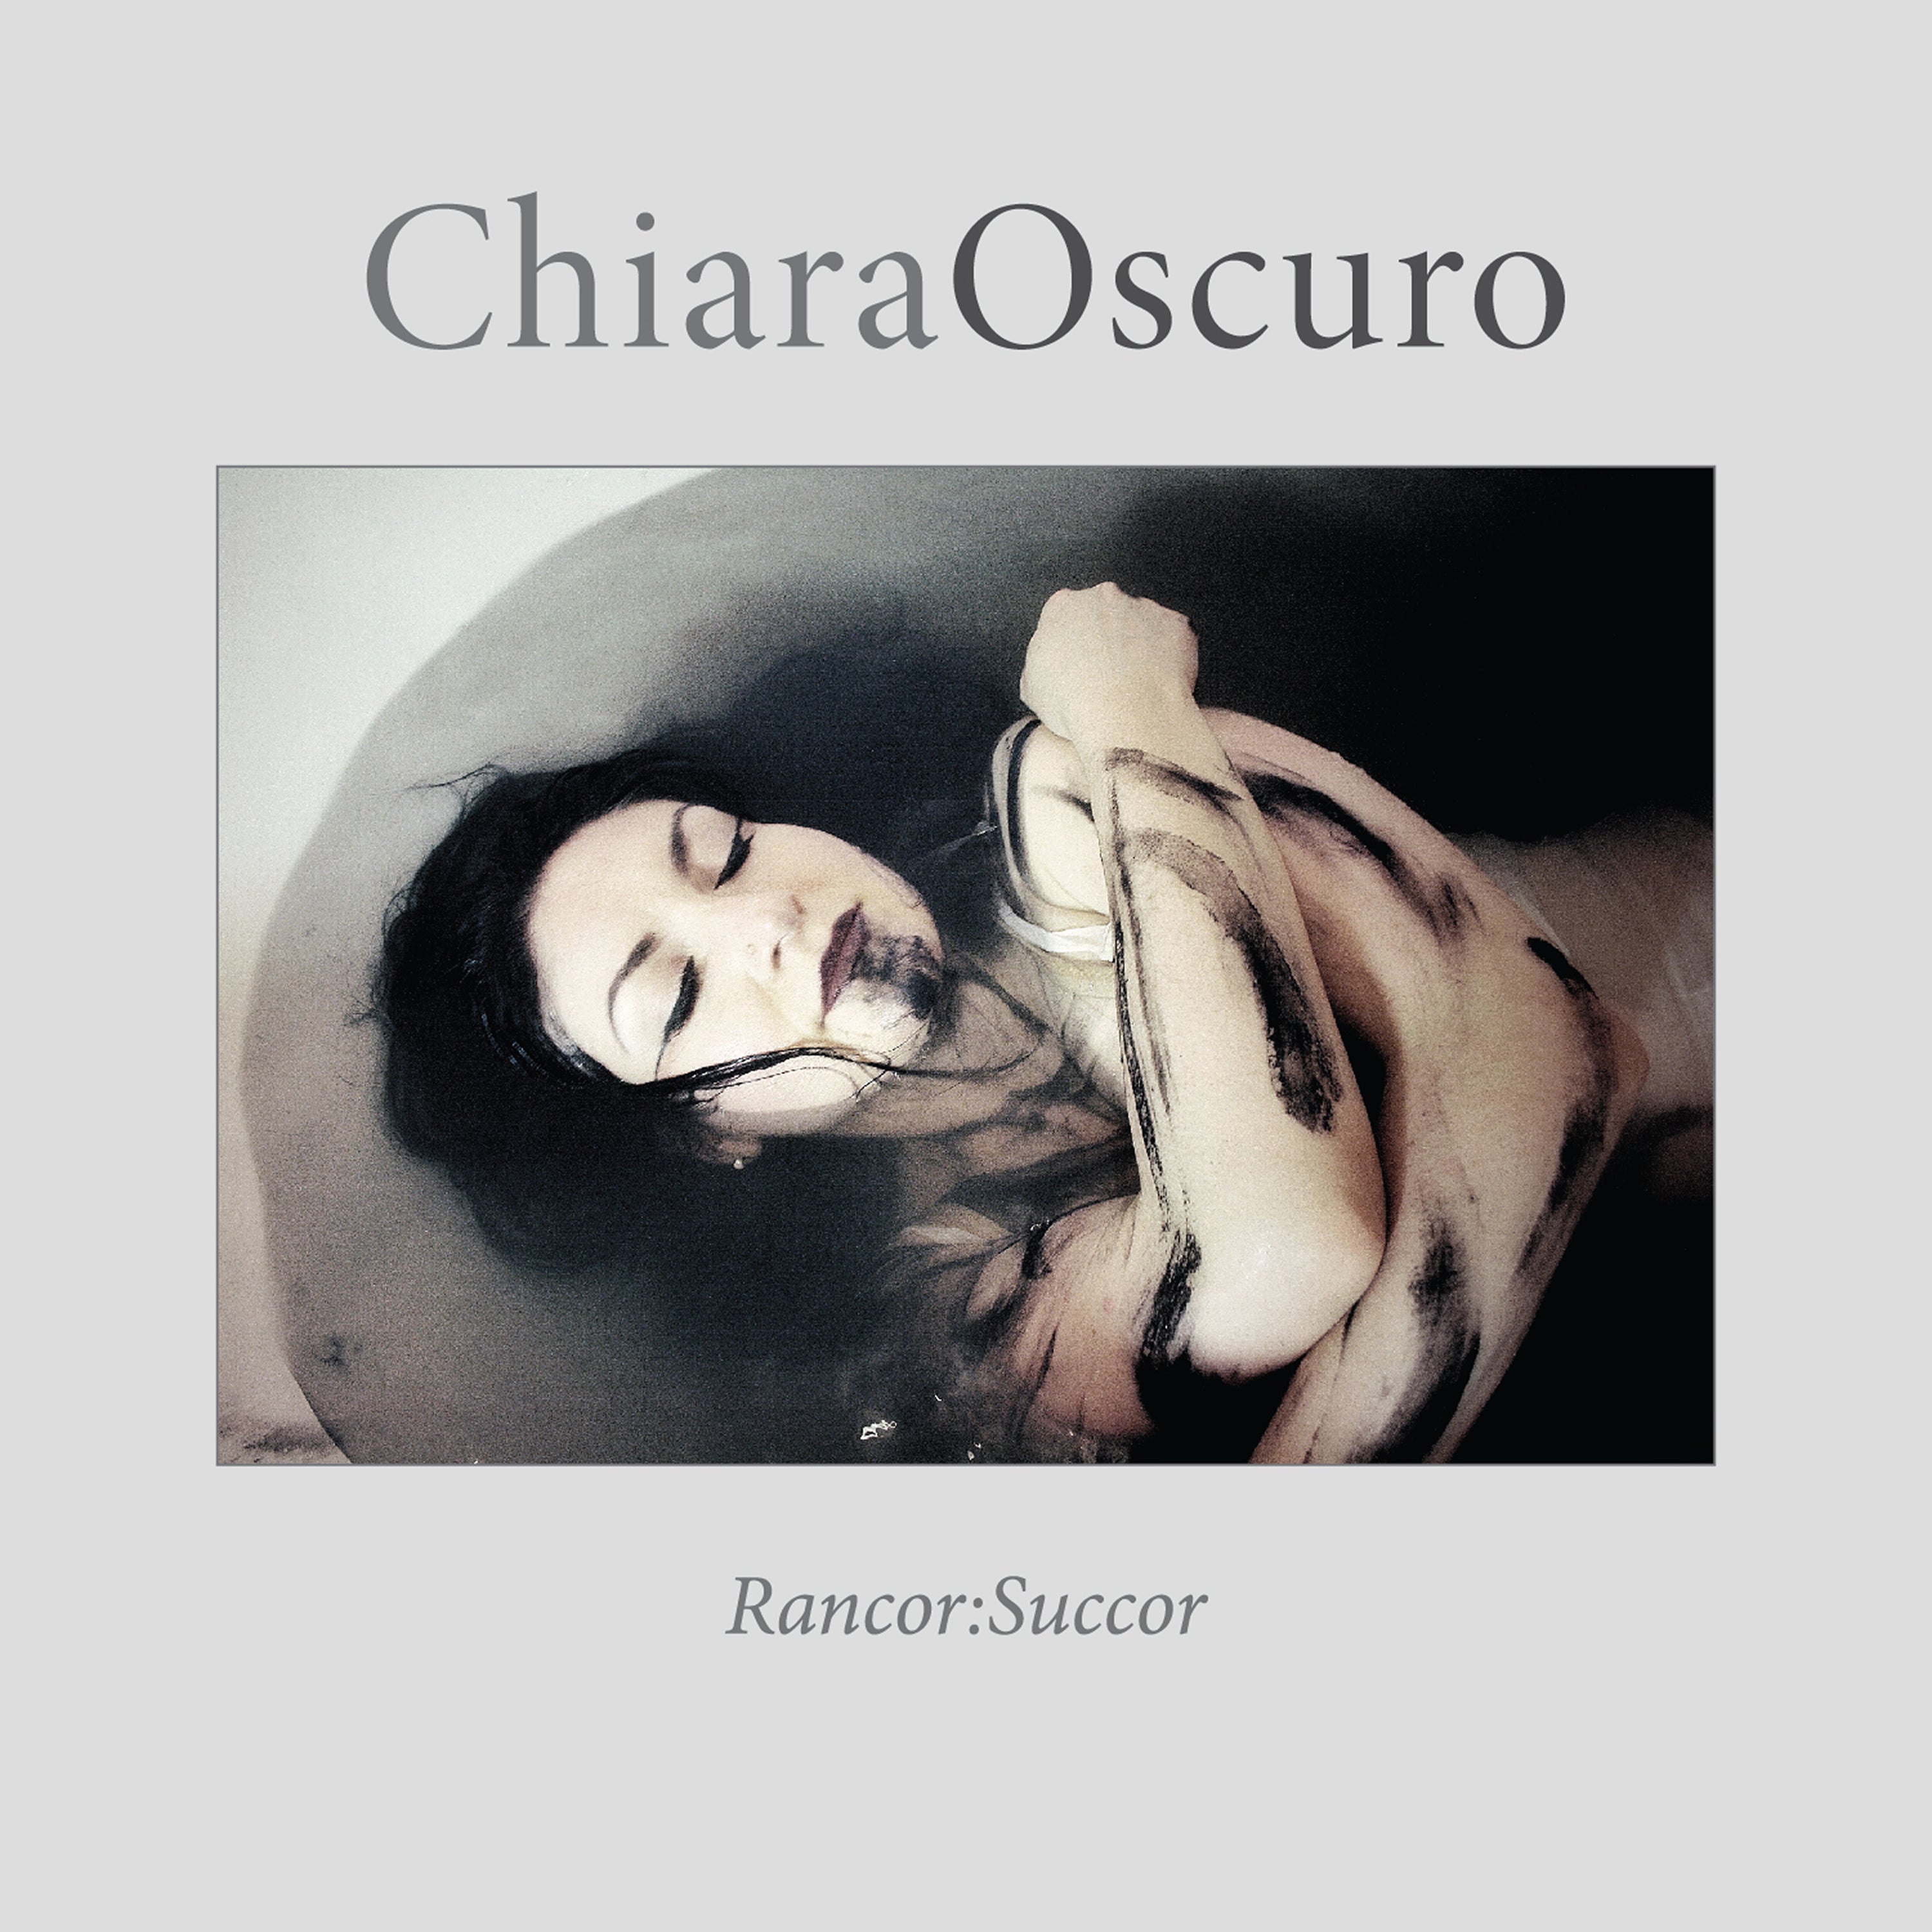 ChiaraOscuro - Rancor:Succor